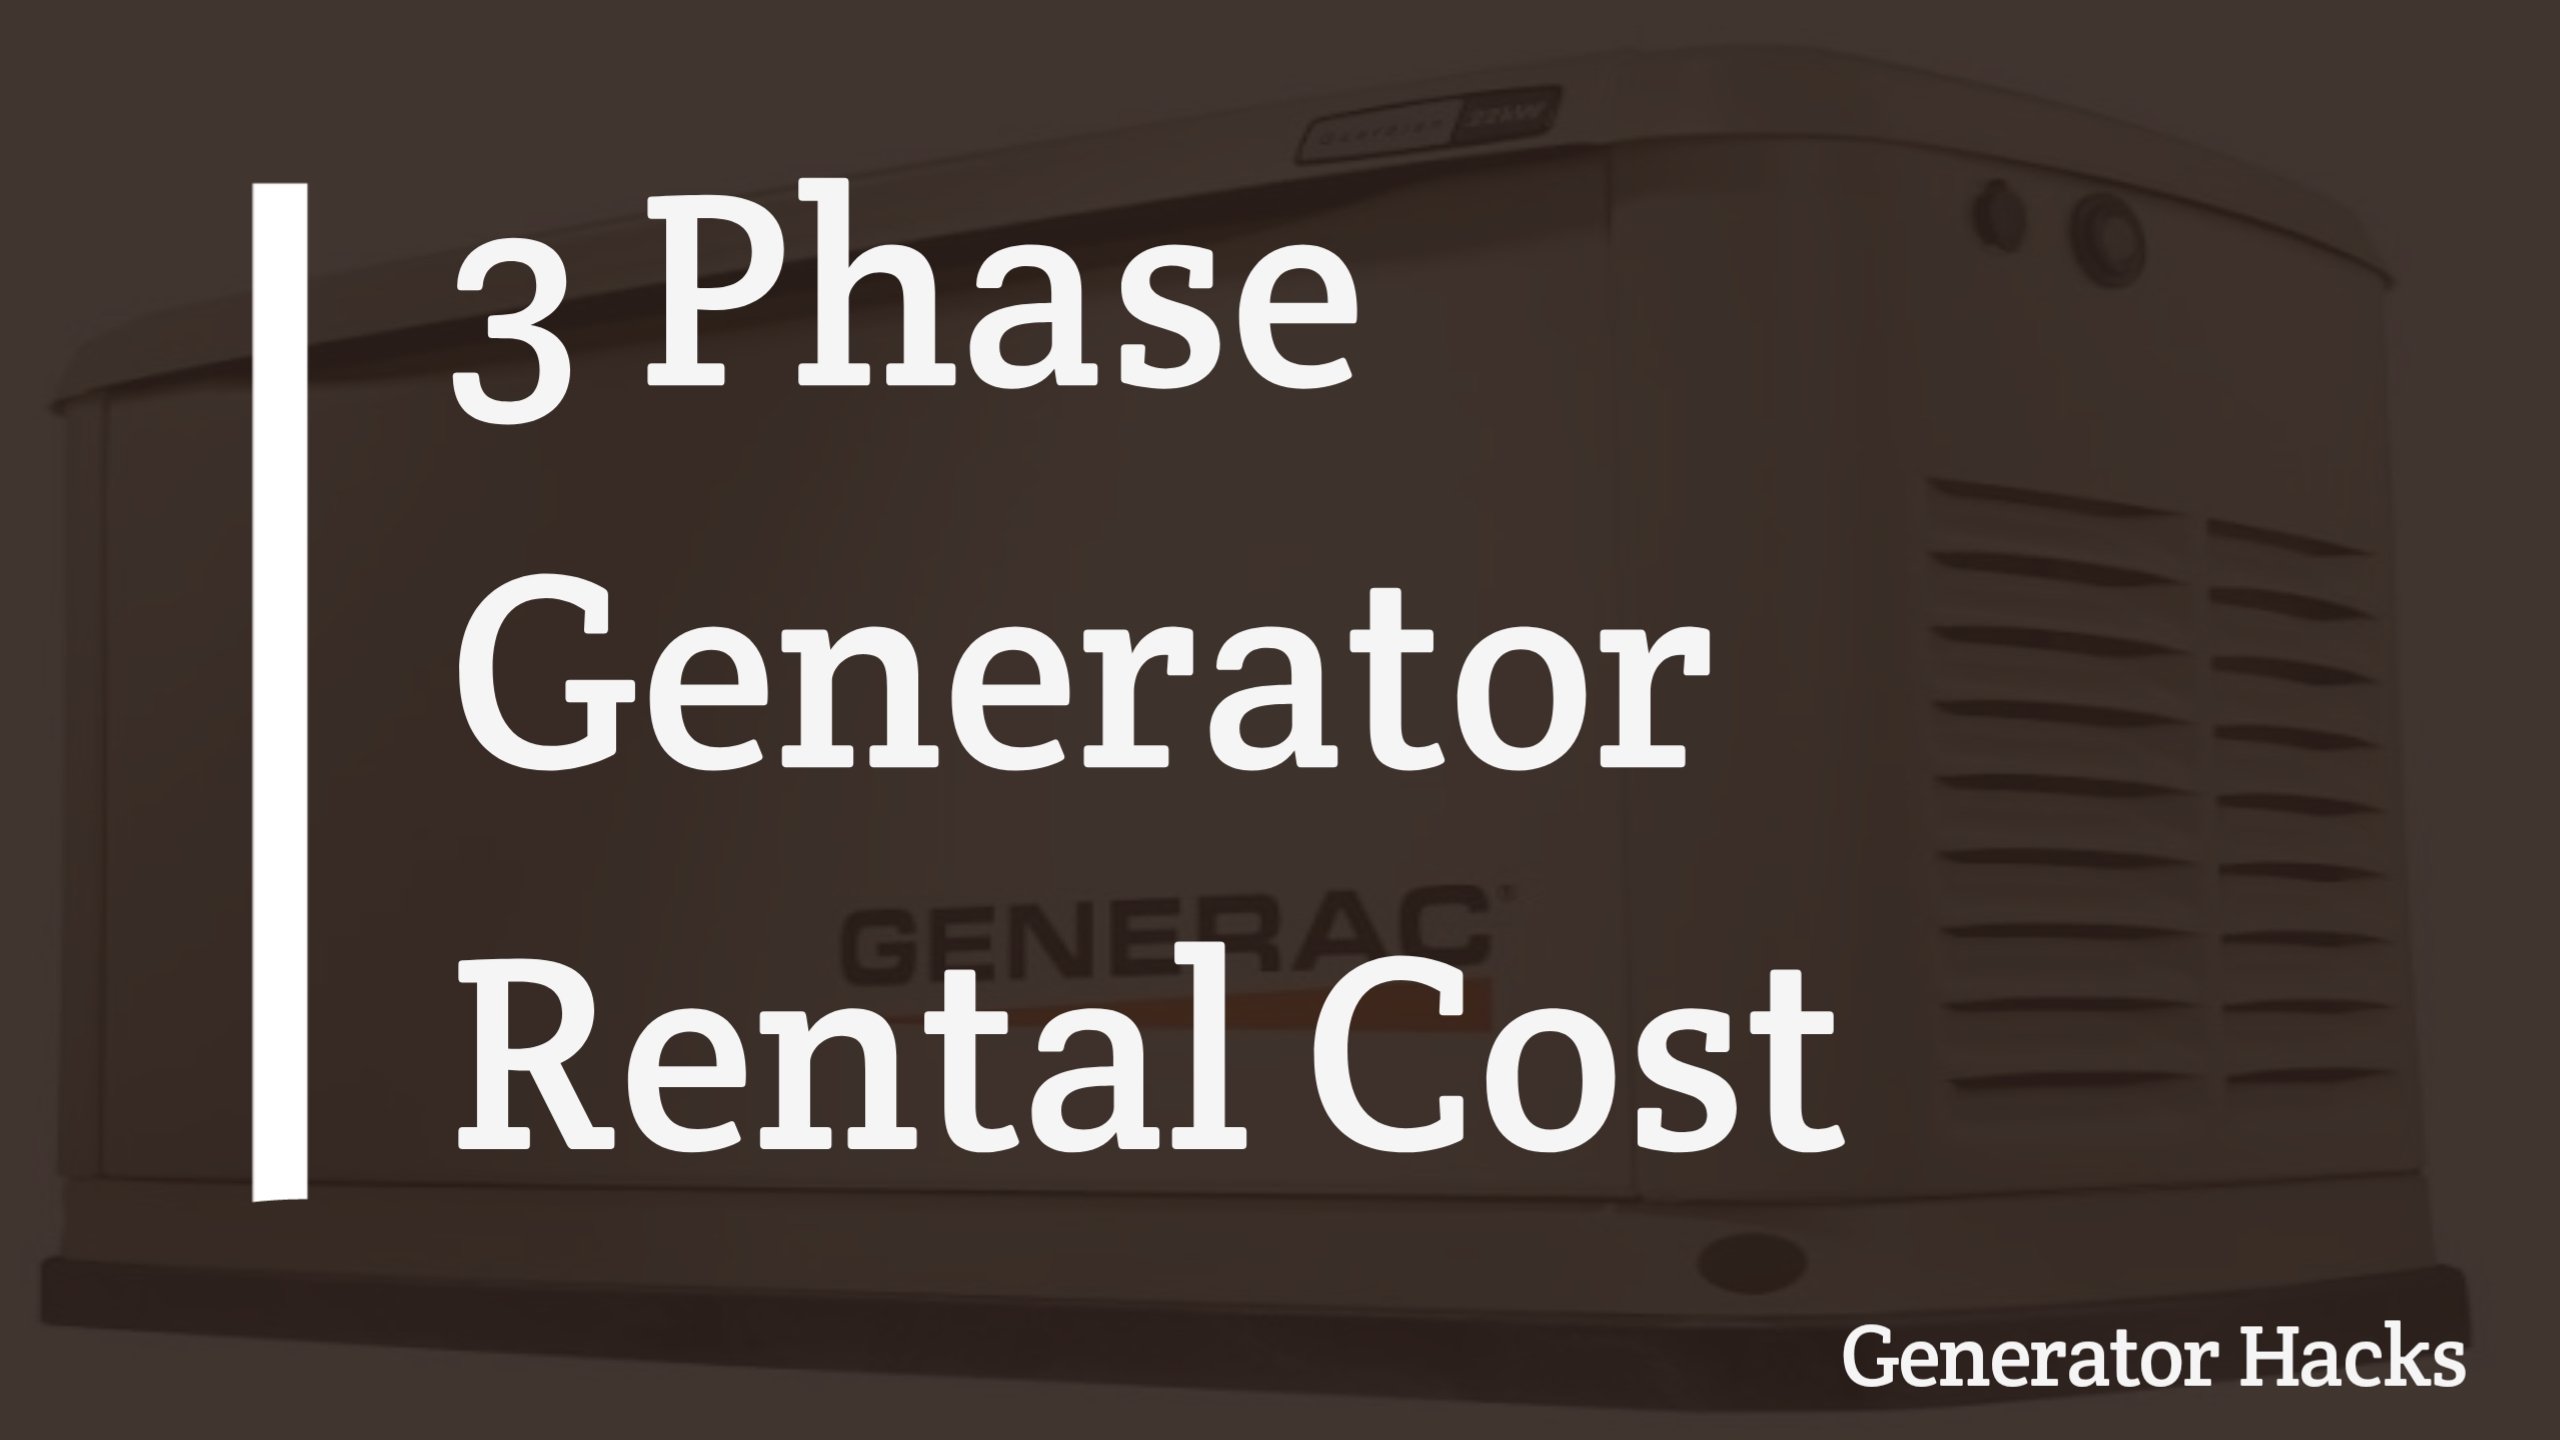 3 phase generator rental cost, generator rental, 3 phase generator, rental cost,